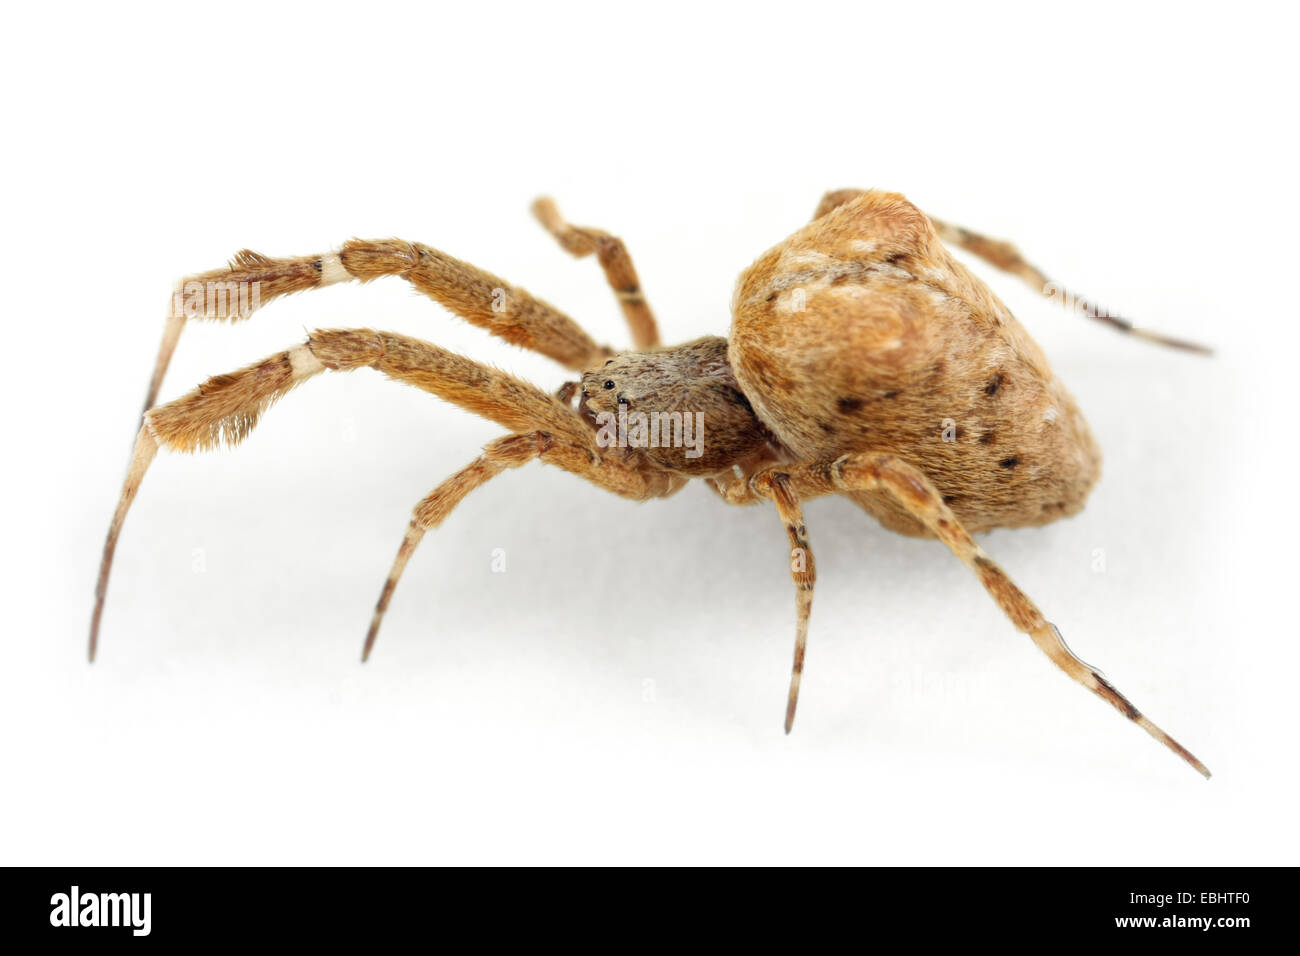 Hothouse femelle araignée Uloborus plumipes Featherleg,, sur fond blanc. Partie de la famille Uloboridae - Cribellate the orbweavers Banque D'Images